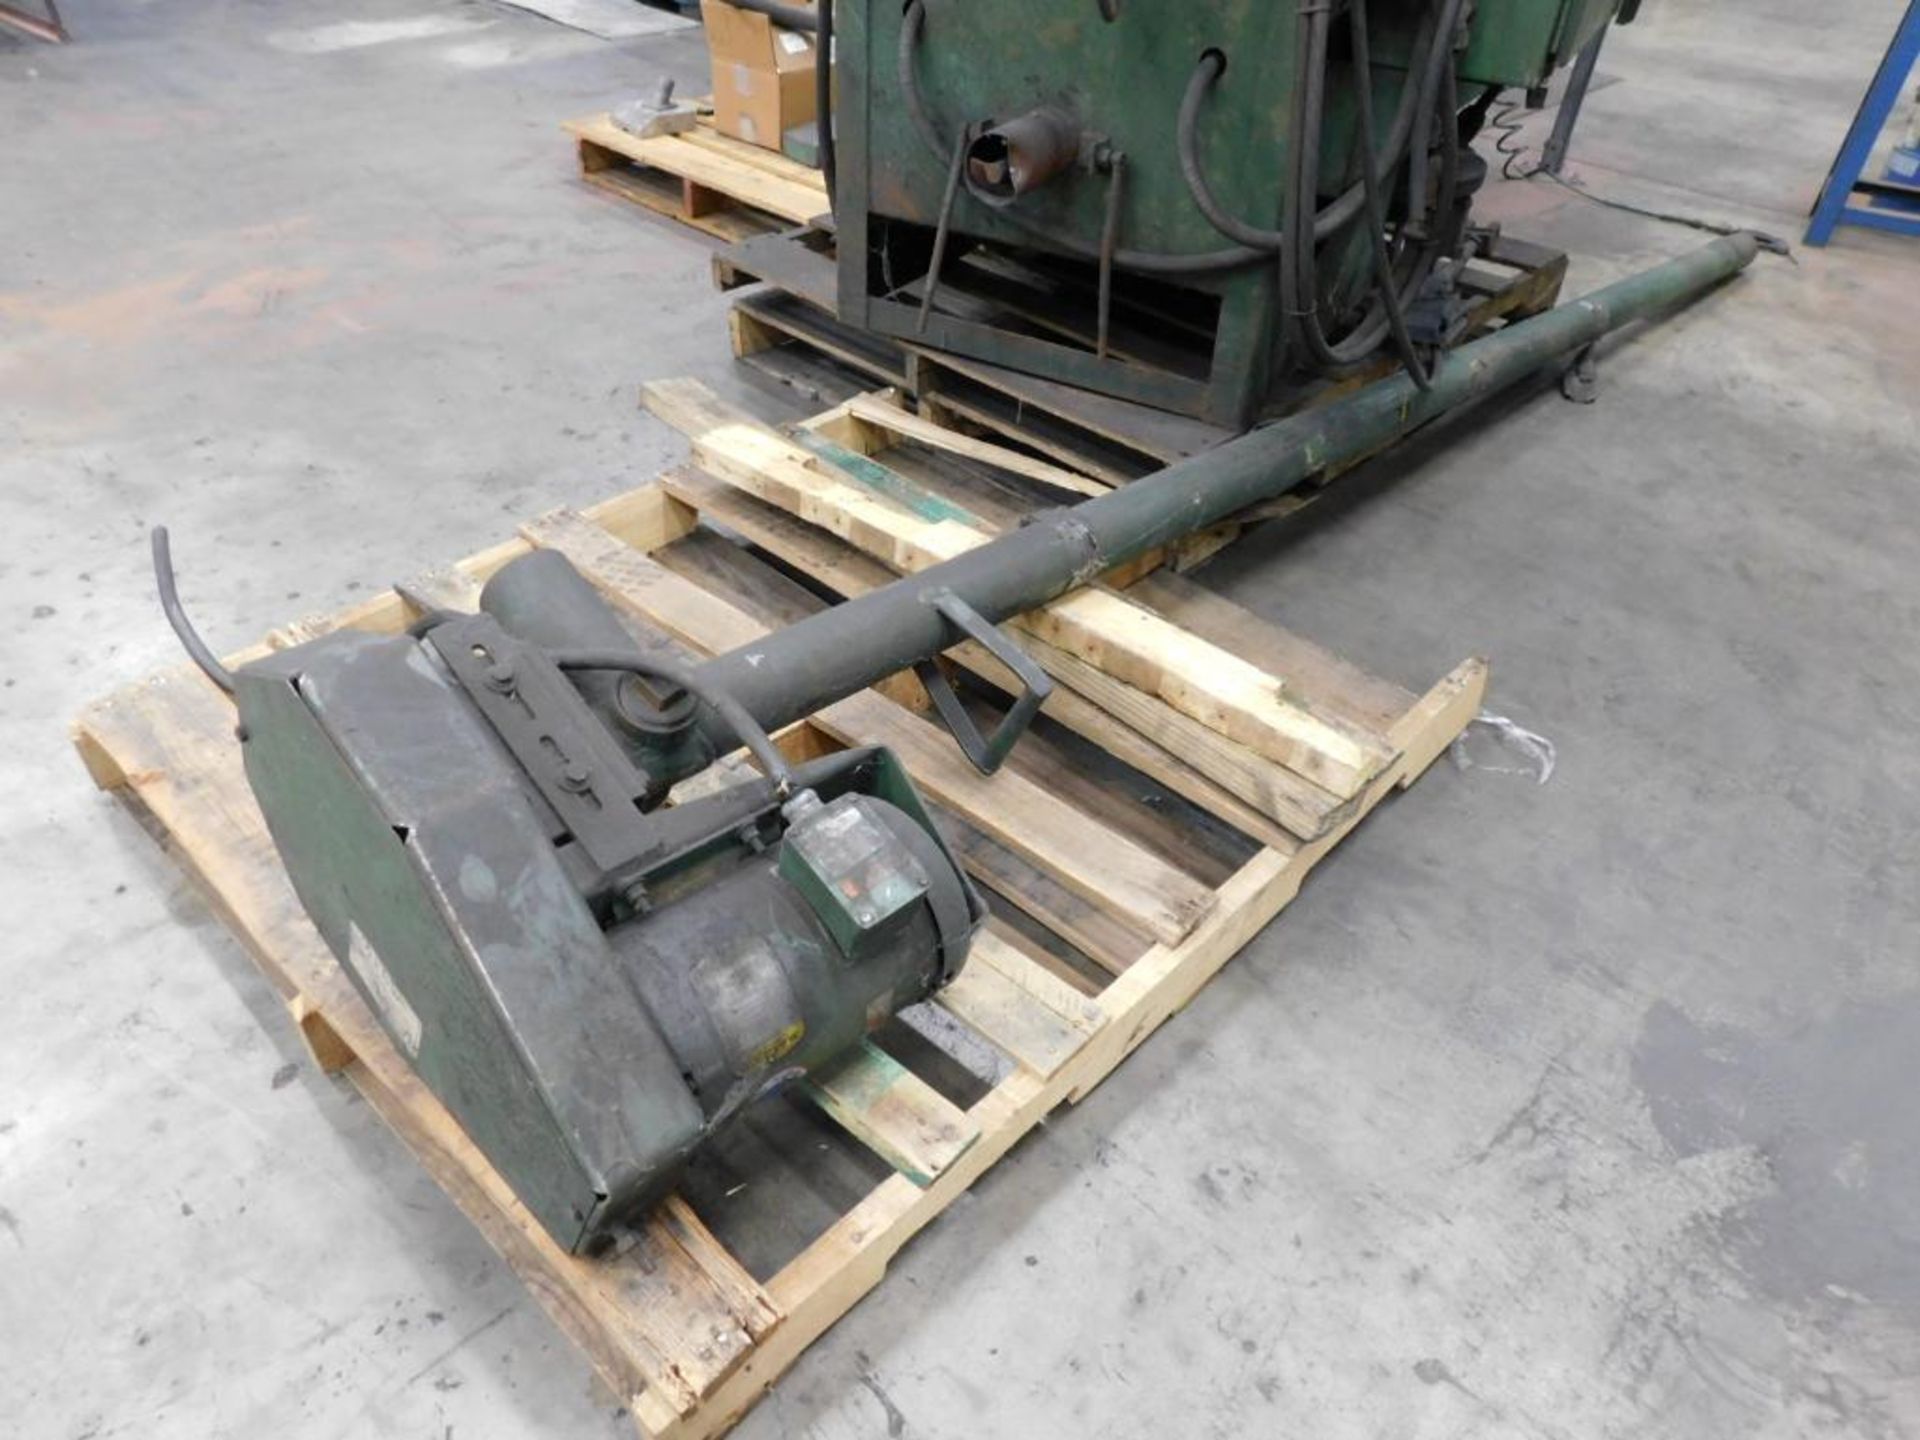 Gasbarre Powder Compacting Press, Mechanical, Model 30 Standard, S/N: 86256, 30 Ton Maximum Pressing - Image 18 of 22